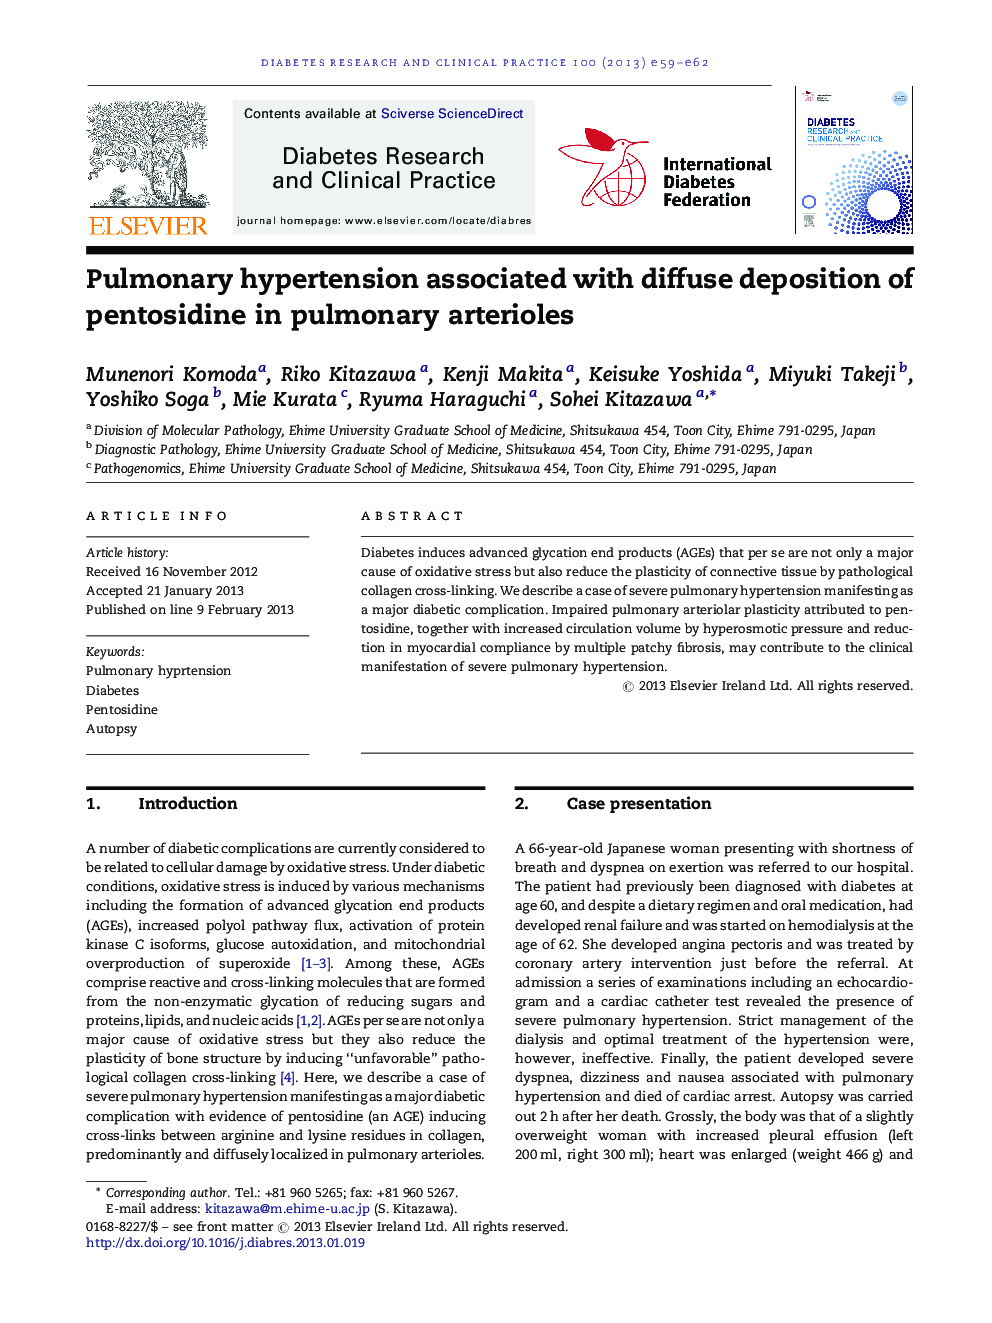 Pulmonary hypertension associated with diffuse deposition of pentosidine in pulmonary arterioles